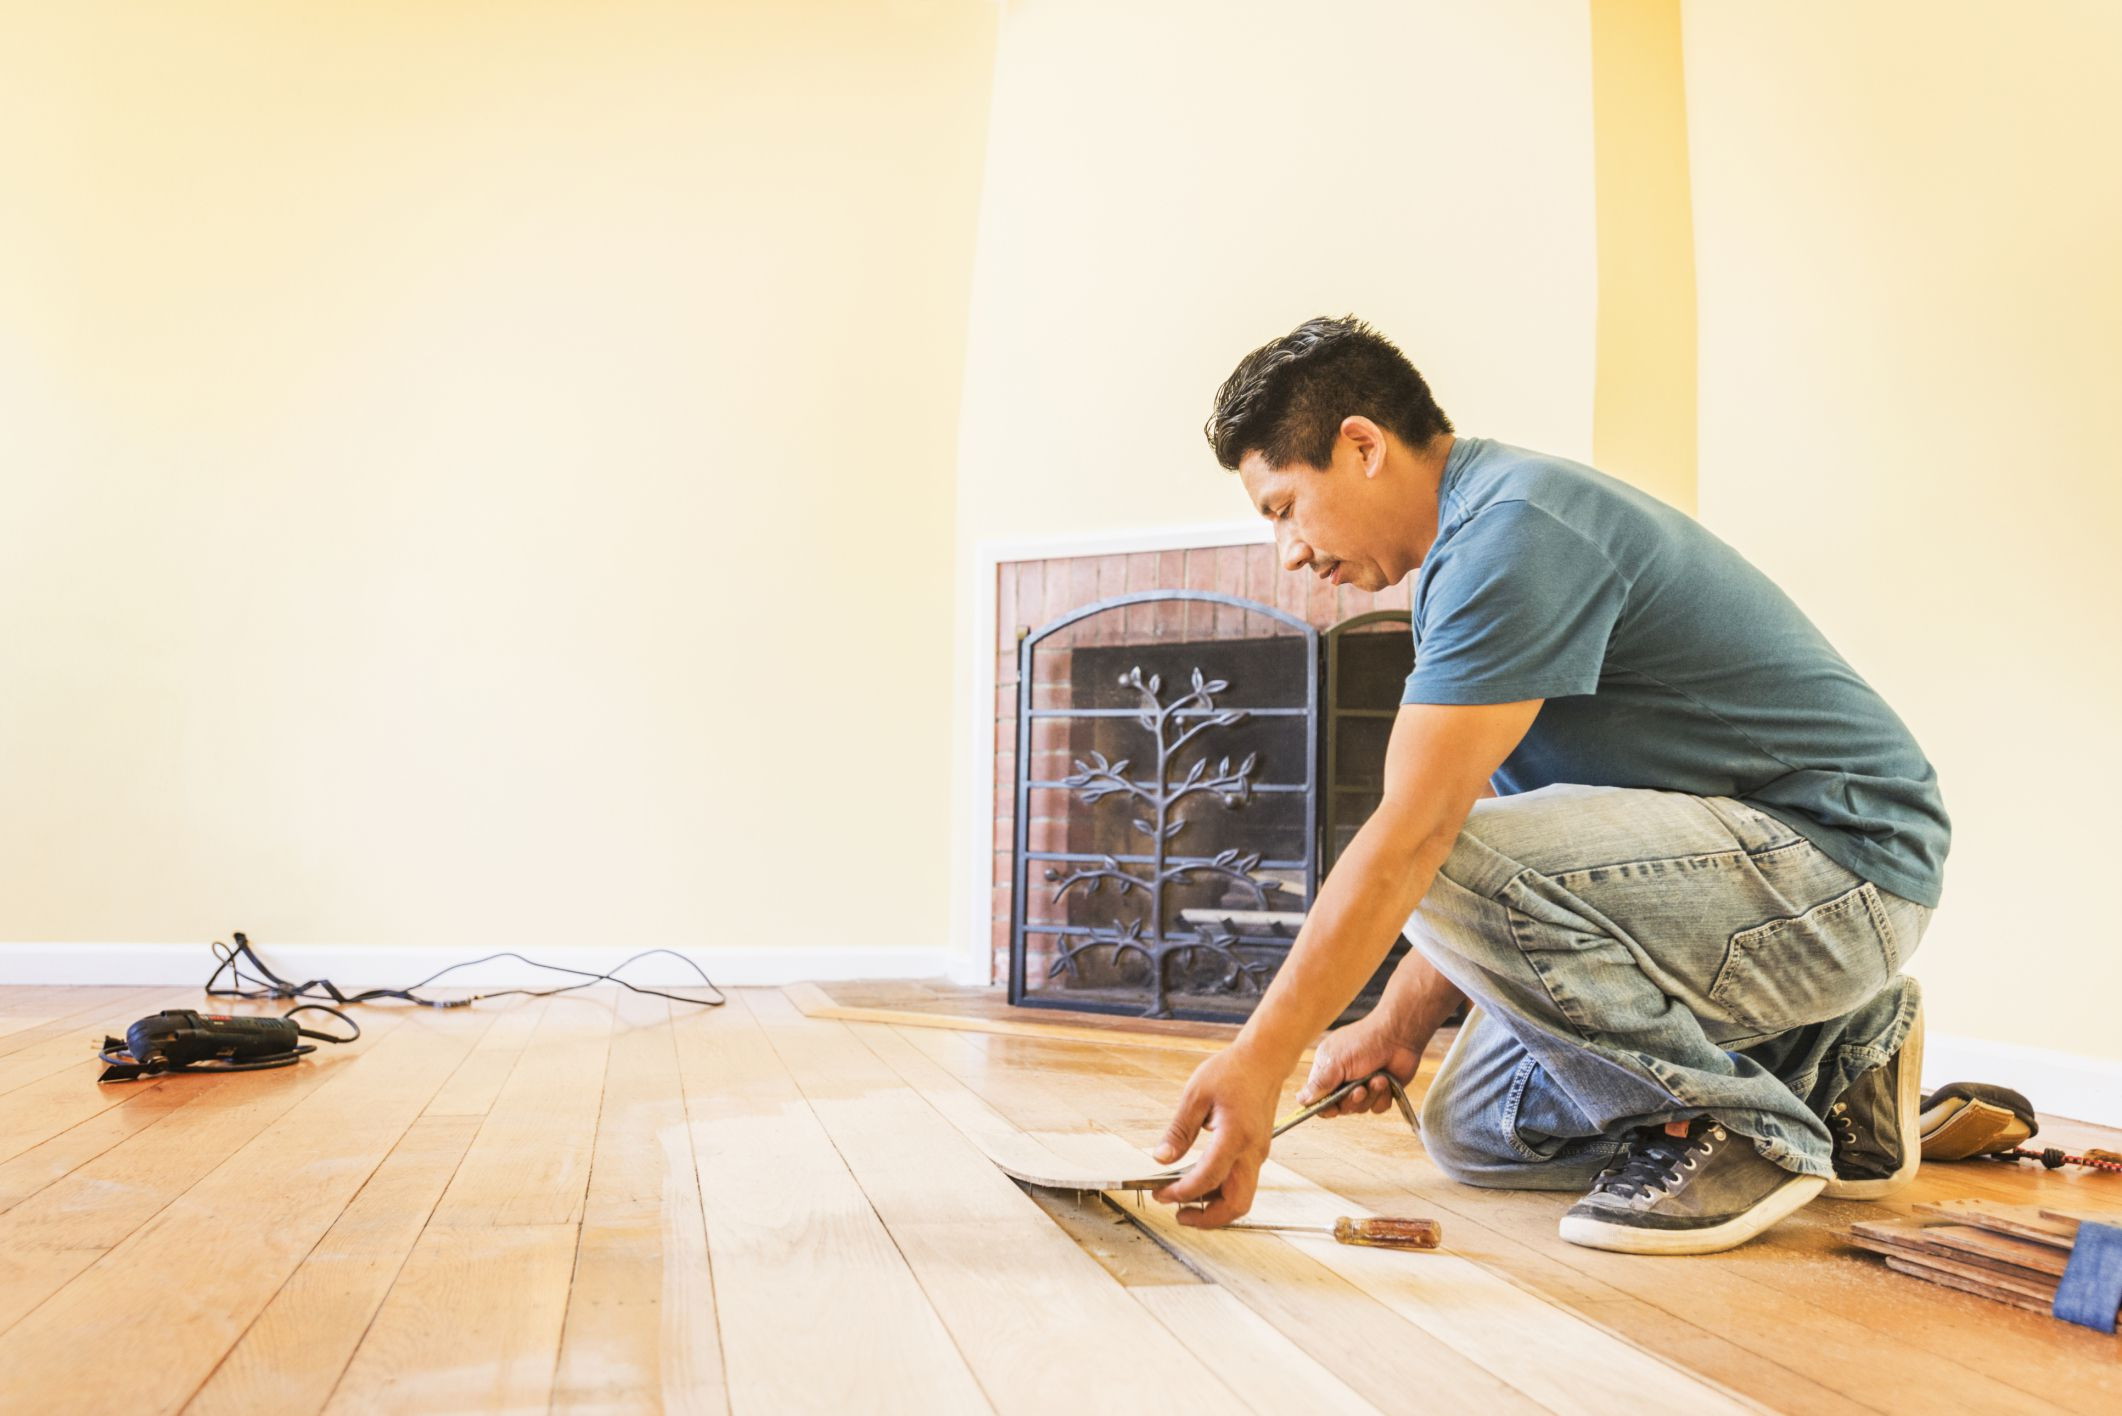 hardwood flooring installation ottawa of solid hardwood flooring costs for professional vs diy for installwoodflooring 592016327 56684d6f3df78ce1610a598a